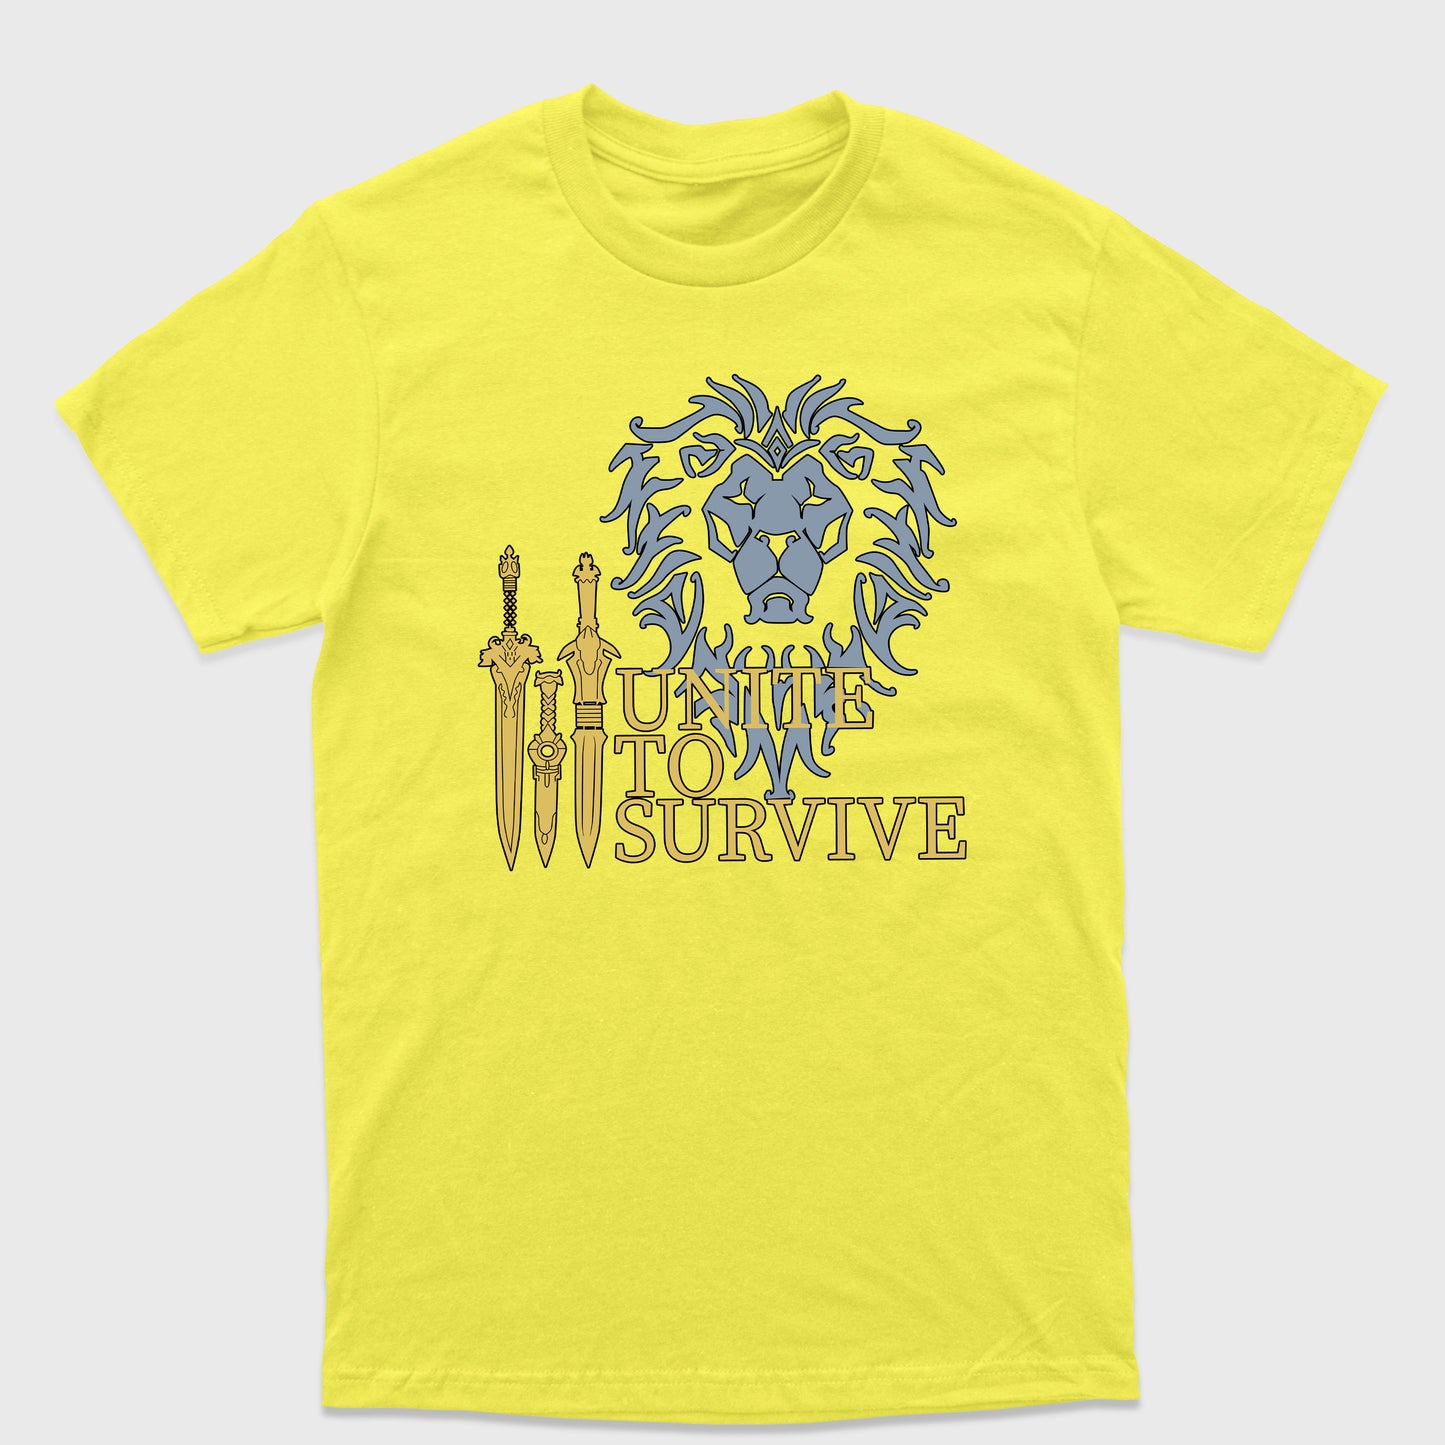 Camiseta Básica Unite to Survive Alliance WoW